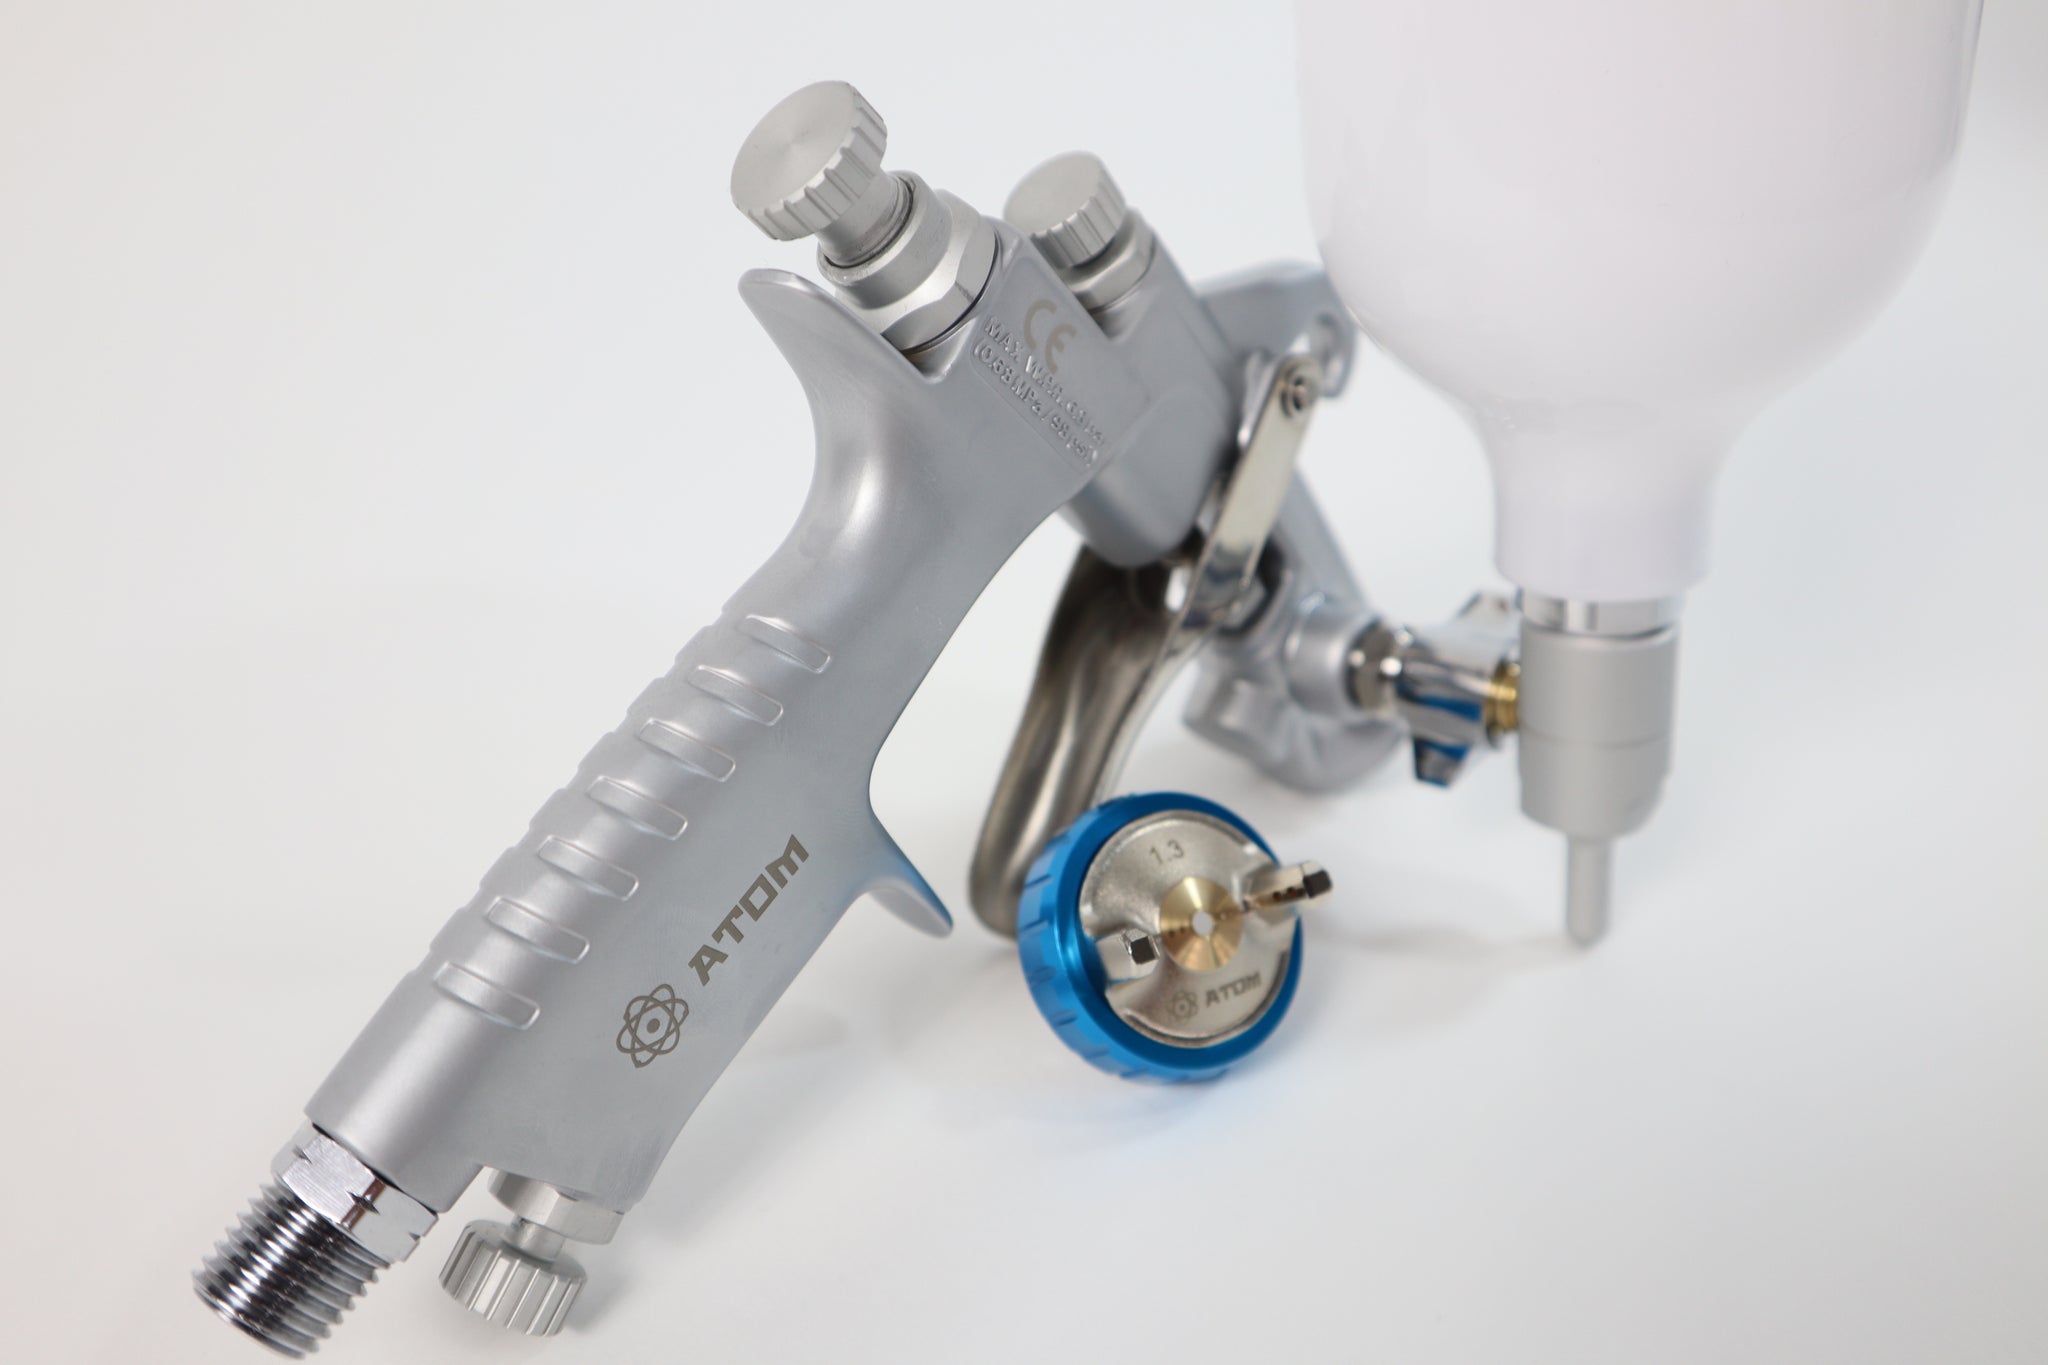 HVLP Spray Gun ATOM Mini X16 Automotive Paint Spray With FREE GUBUDD LED  LIGHT!!